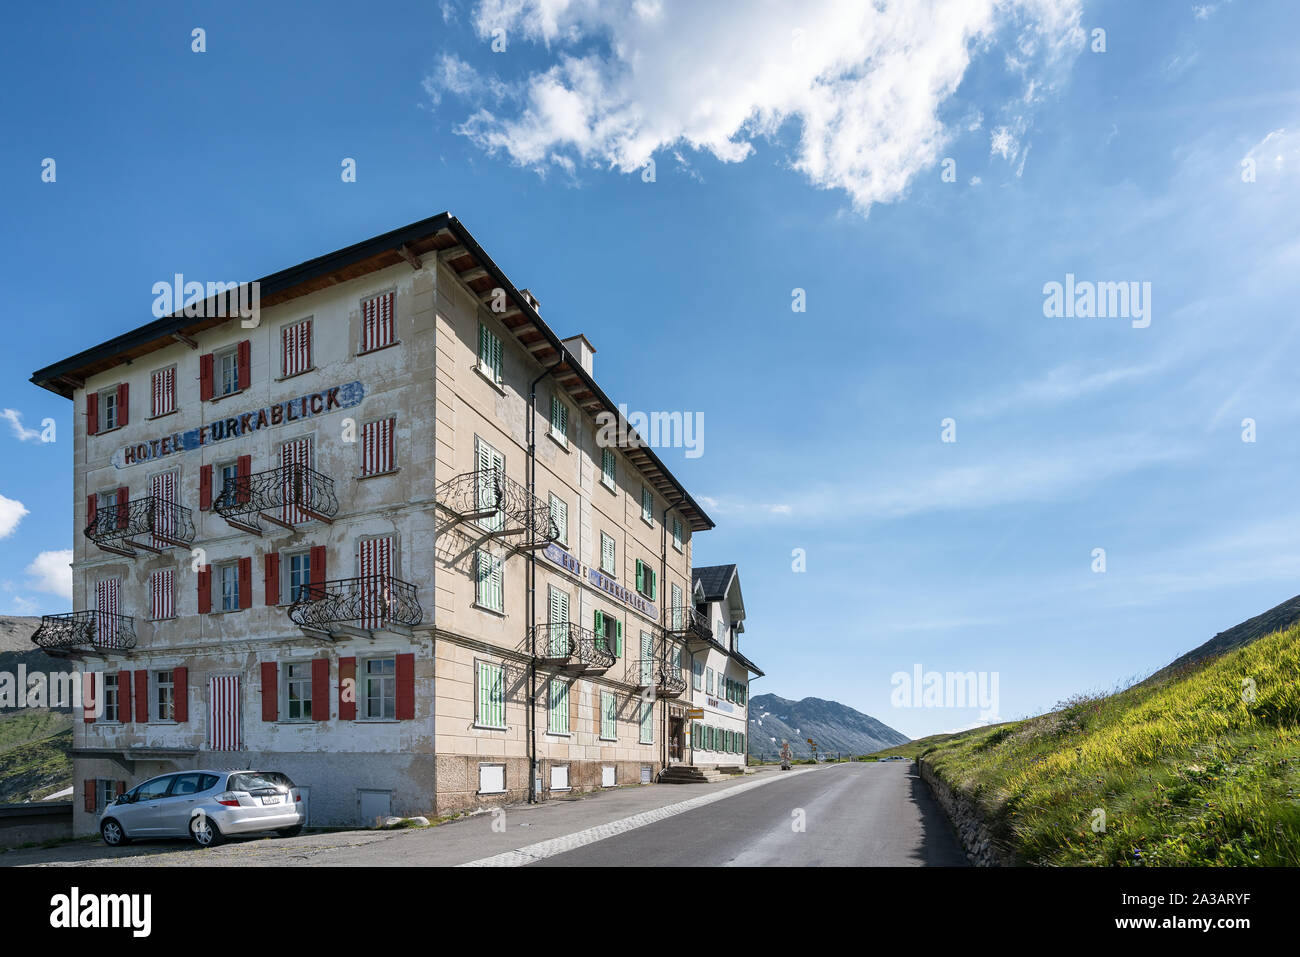 An old Hotel Furkablick at the summit of Furkapass road, Switzerland, Alps Stock Photo